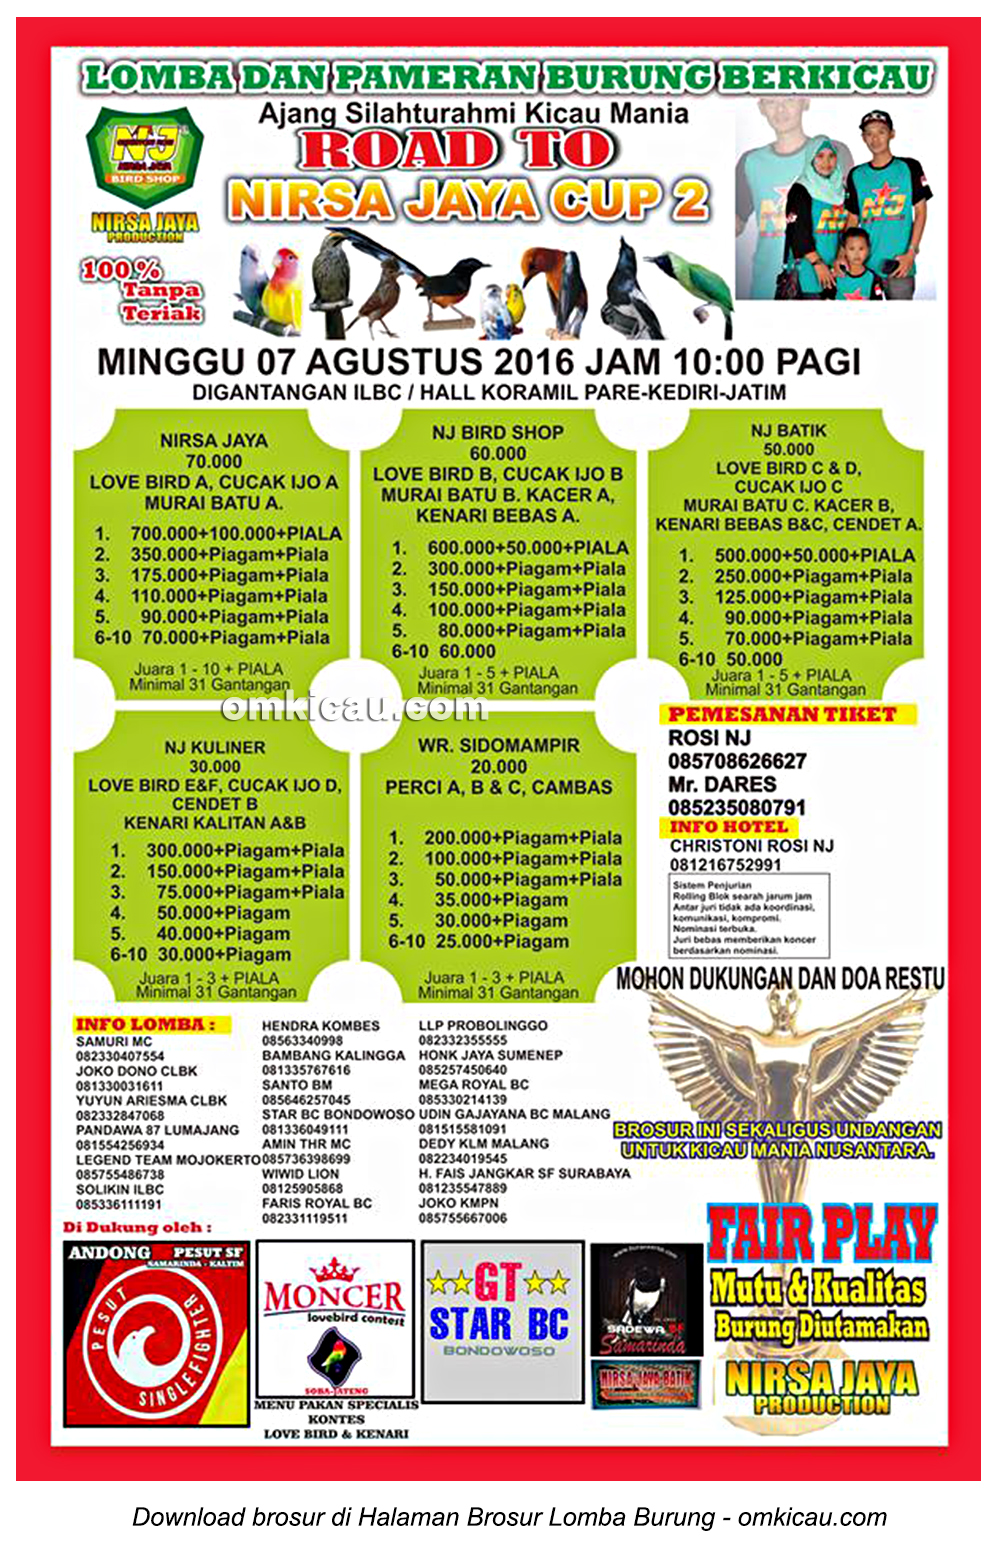 Brosur Lomba Burung Berkicau Road to Nirsa Jaya Cup 2, Kediri, 7 Agustus 2016